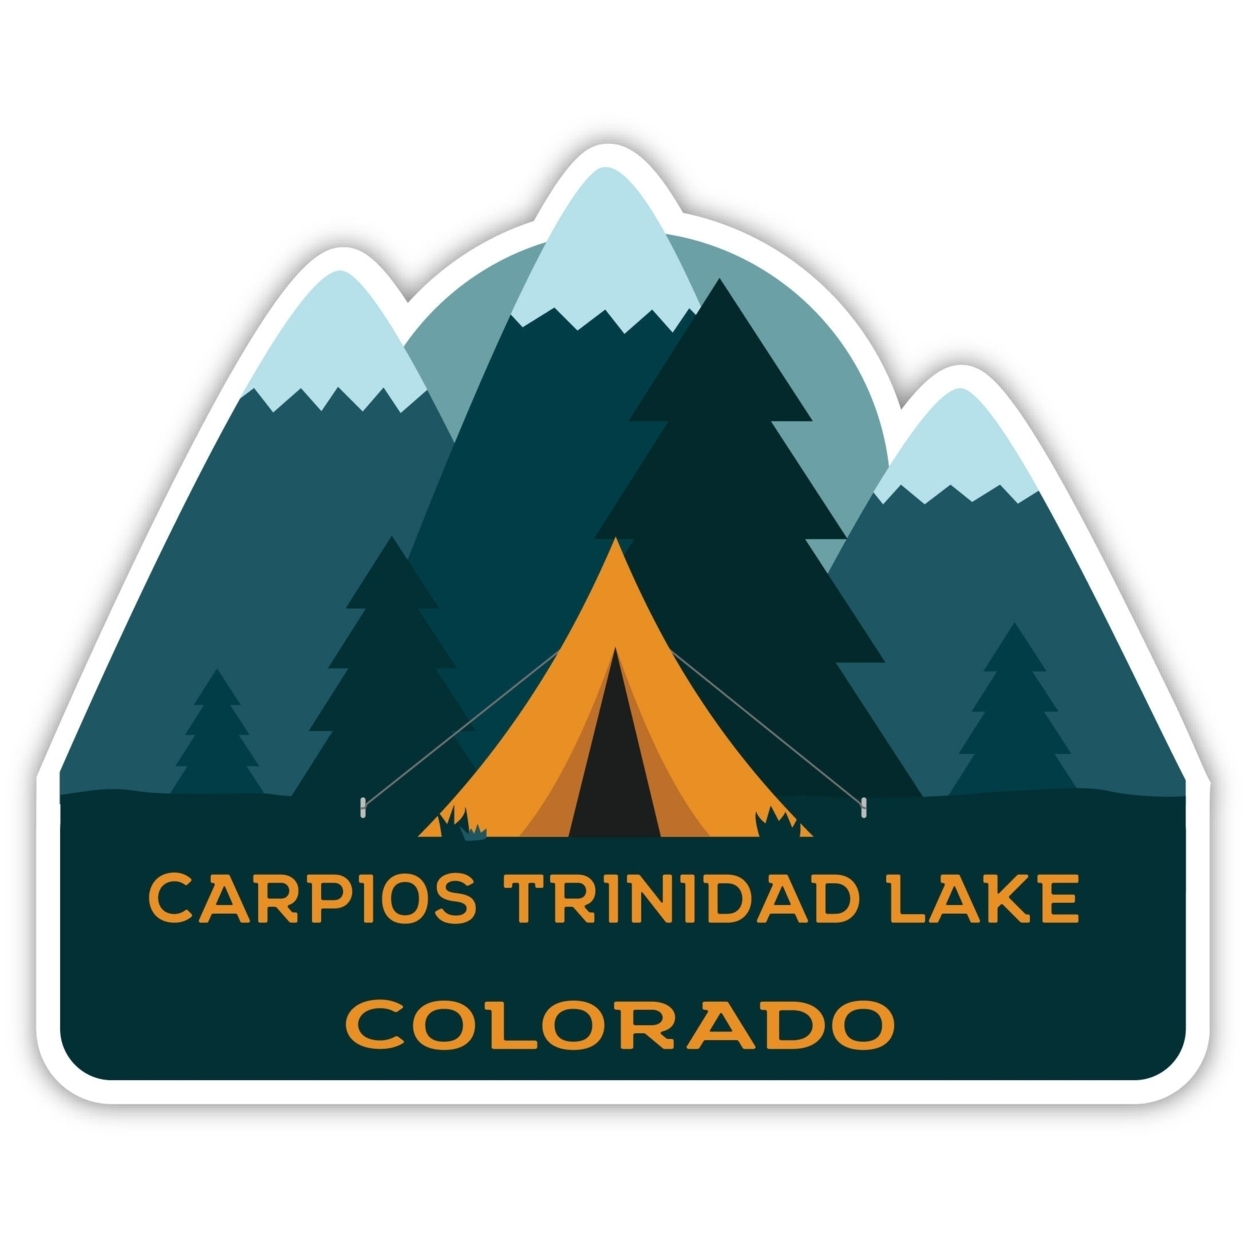 Carpios Trinidad Lake Colorado Souvenir Decorative Stickers (Choose Theme And Size) - 4-Pack, 10-Inch, Tent